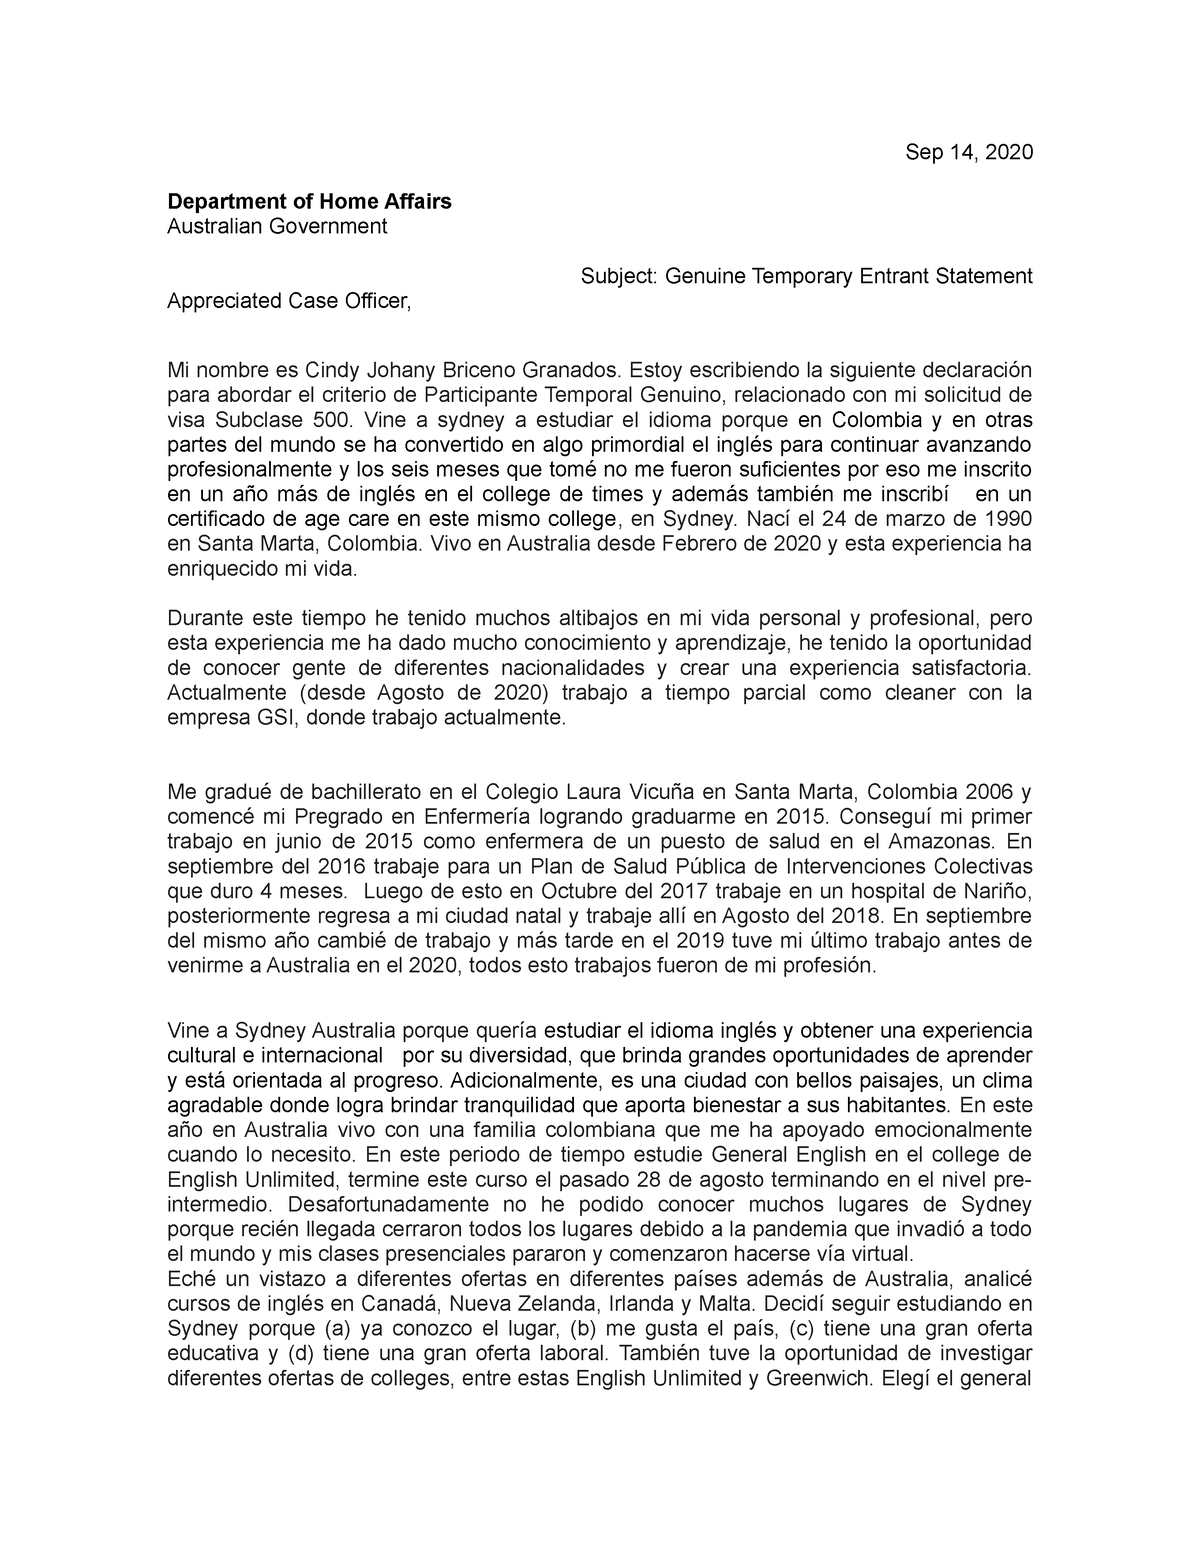 Carta de intencion - Crta de intención para venir a Australia - Sep 14,  2020 Department of Home - Studocu